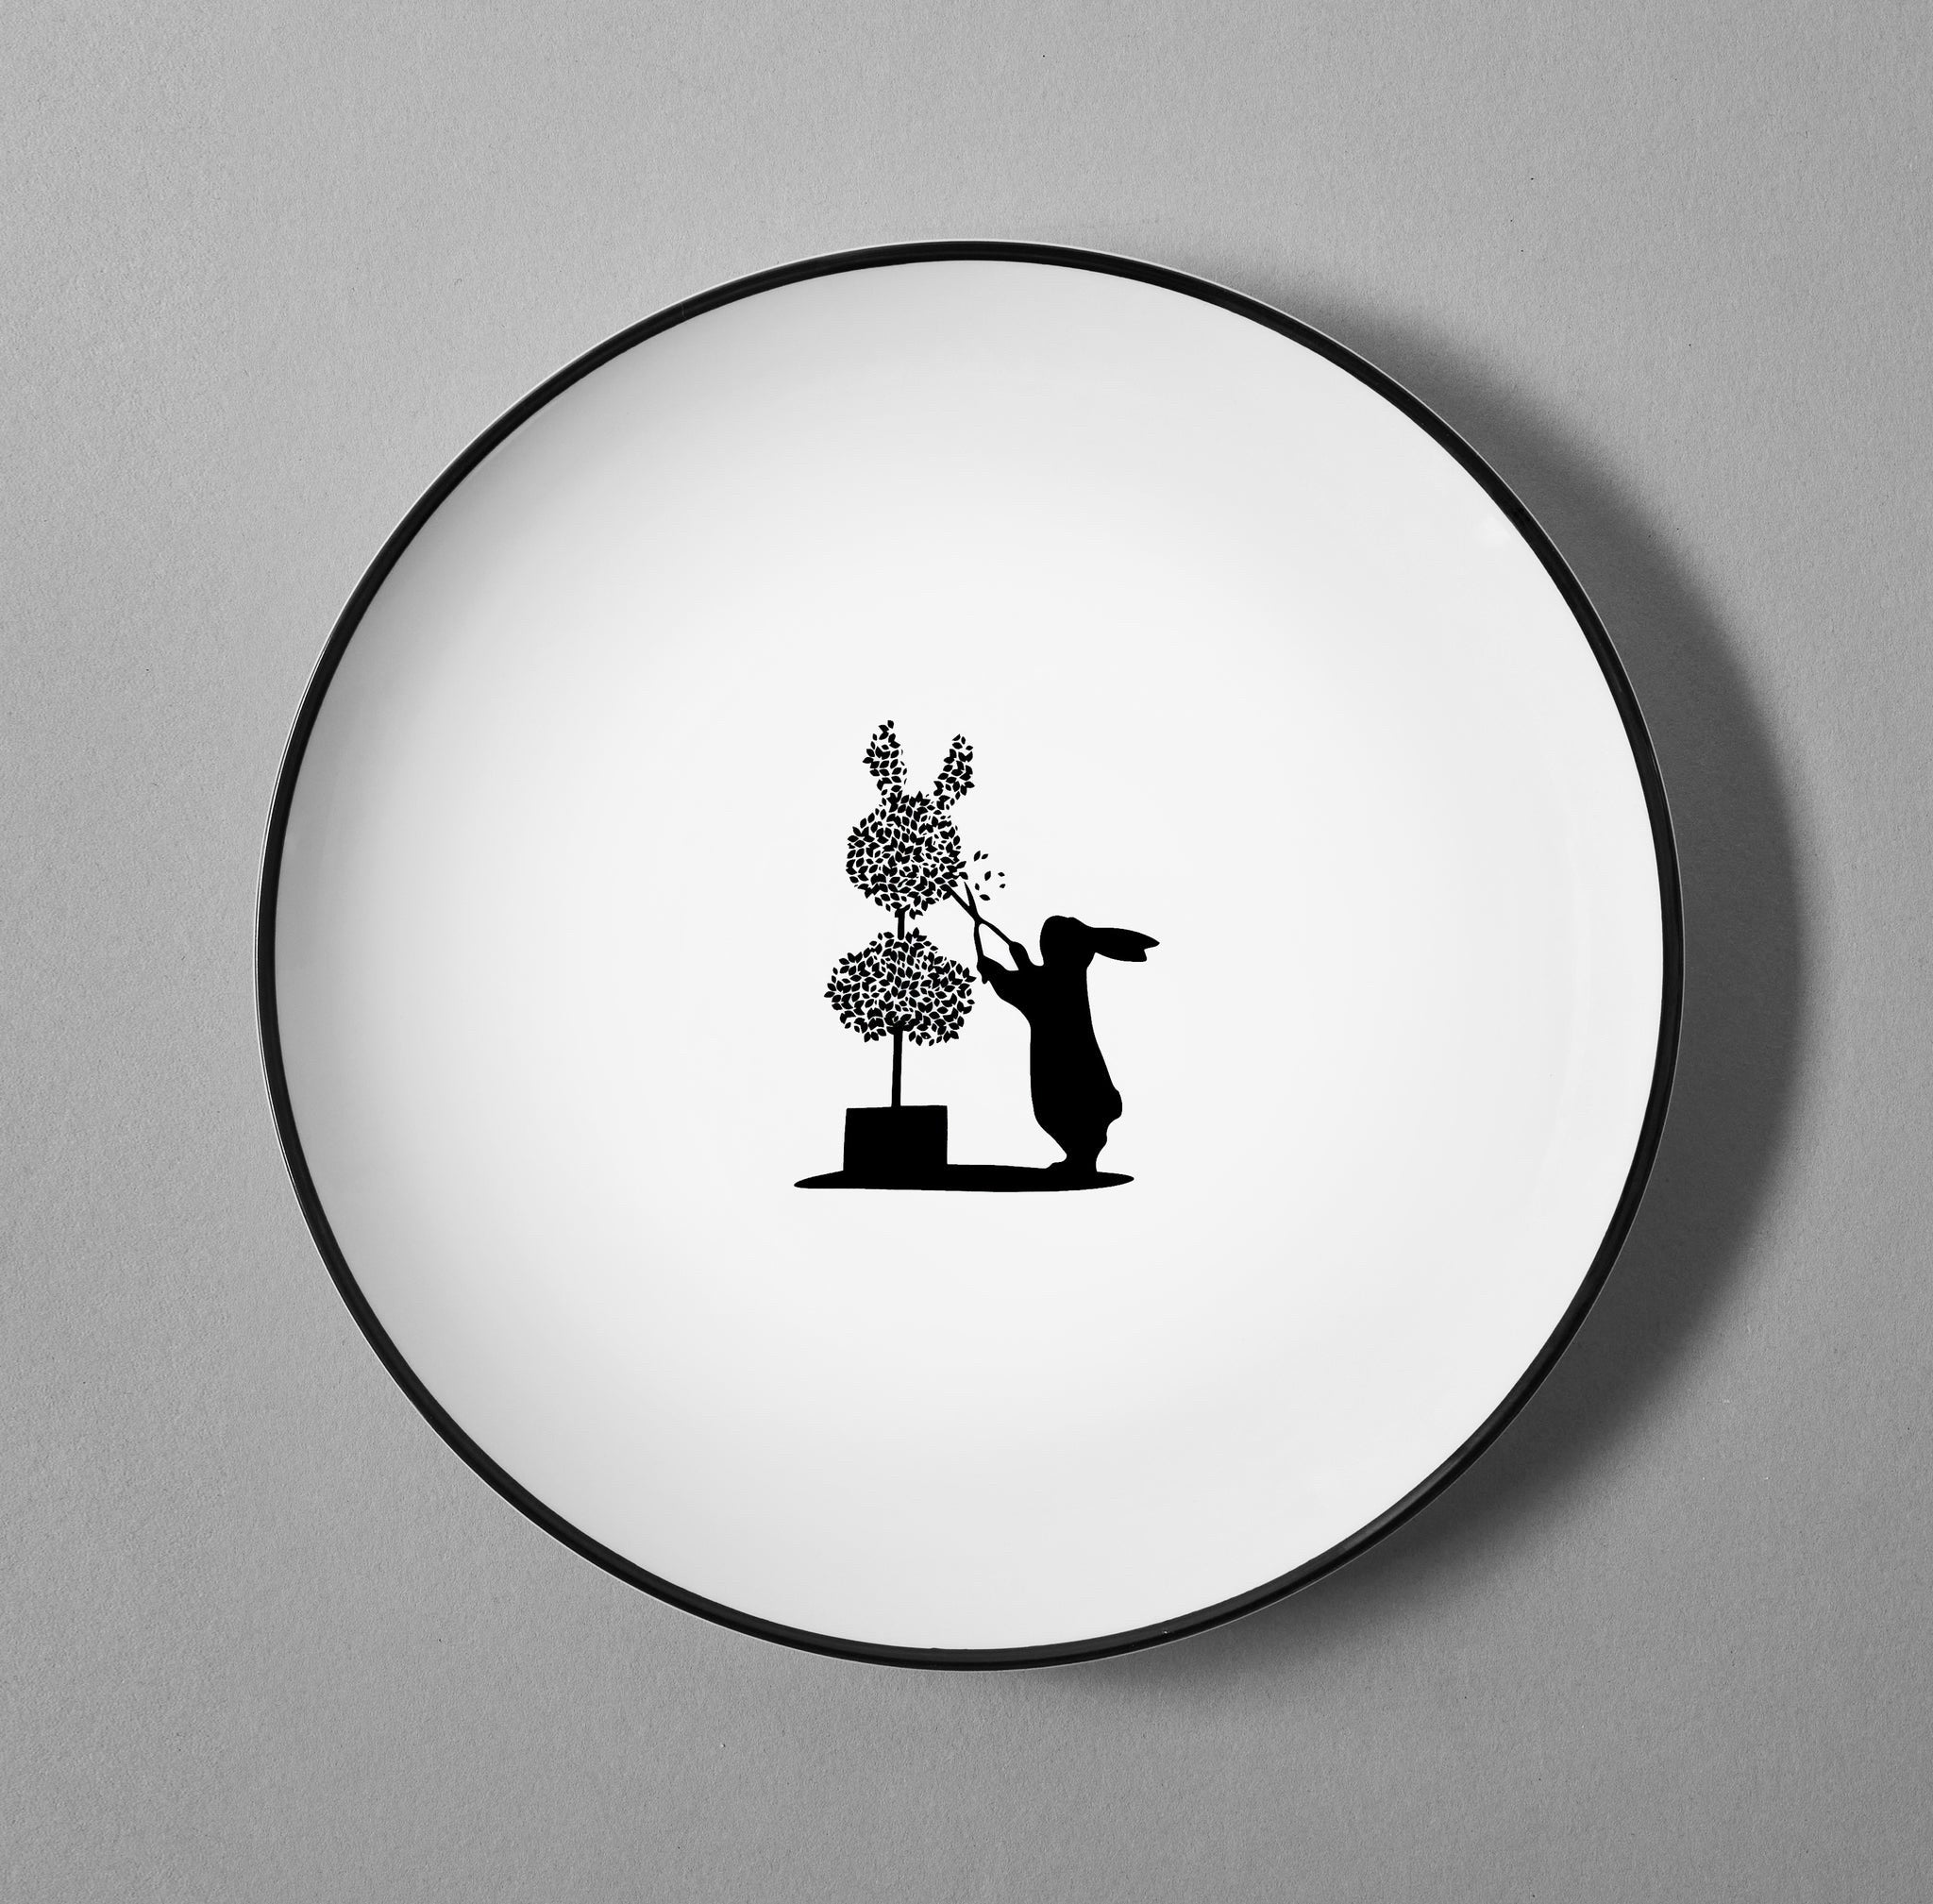 HAM Rabbit Plate